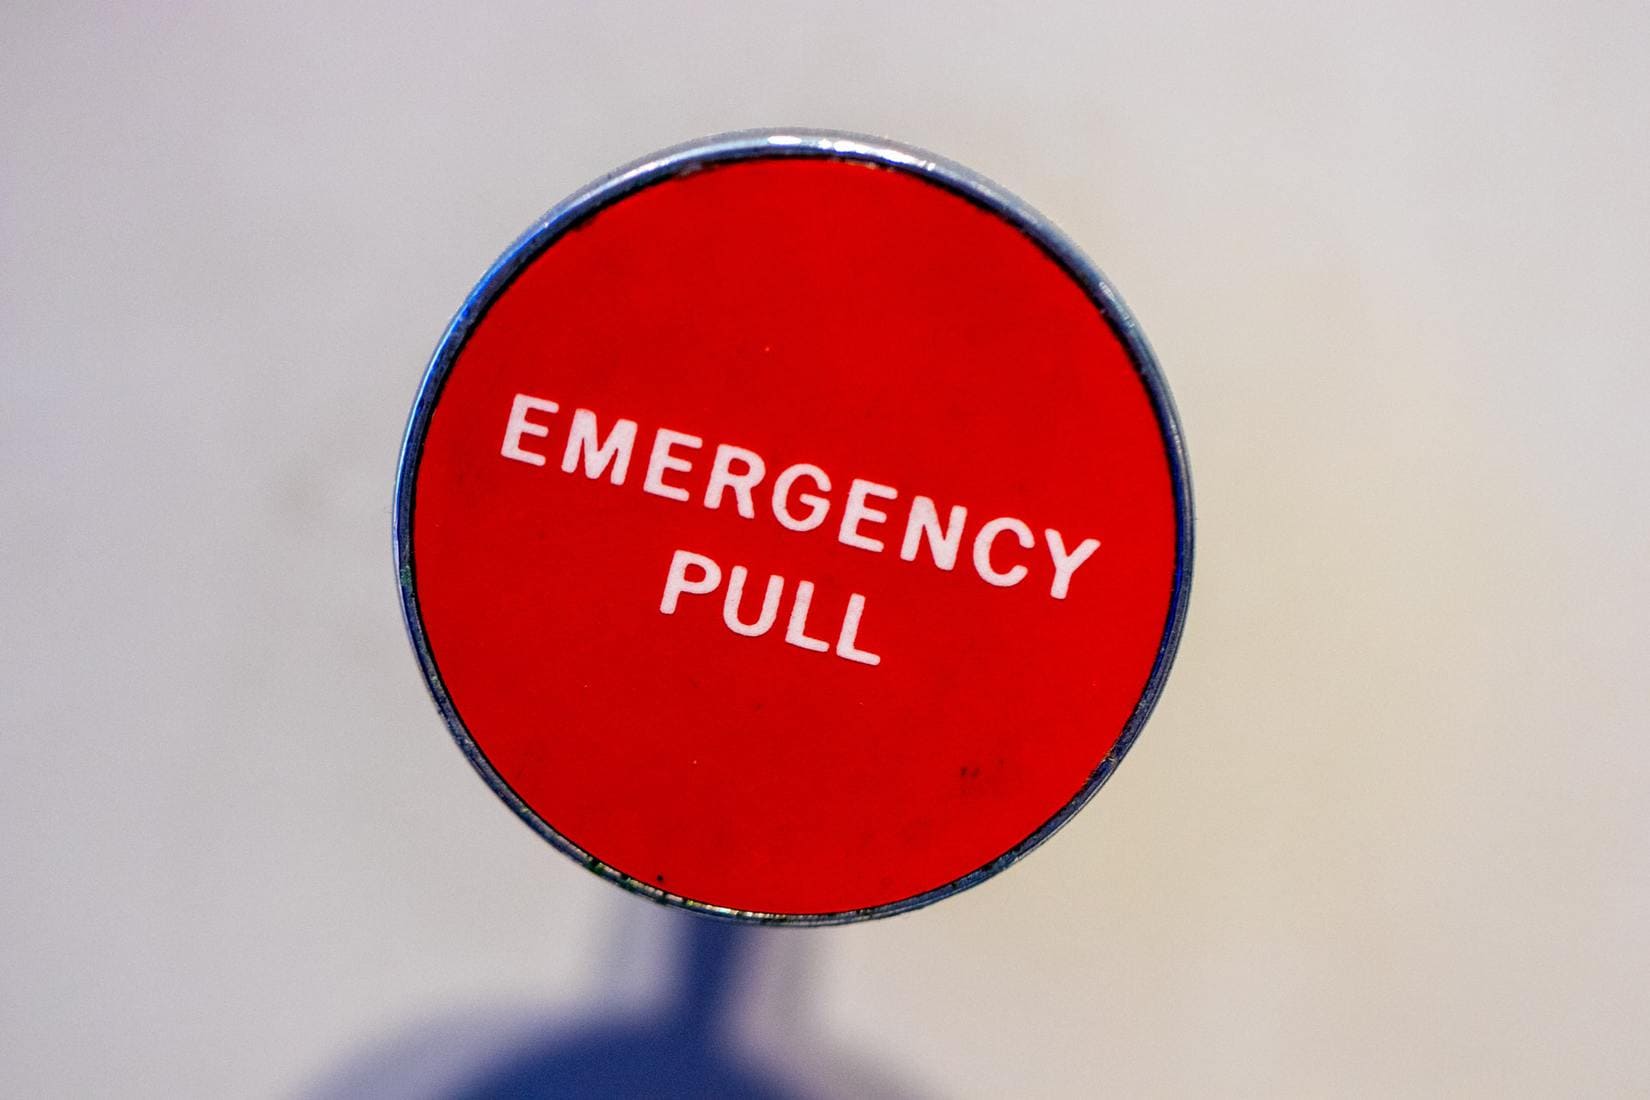 Emergency pull